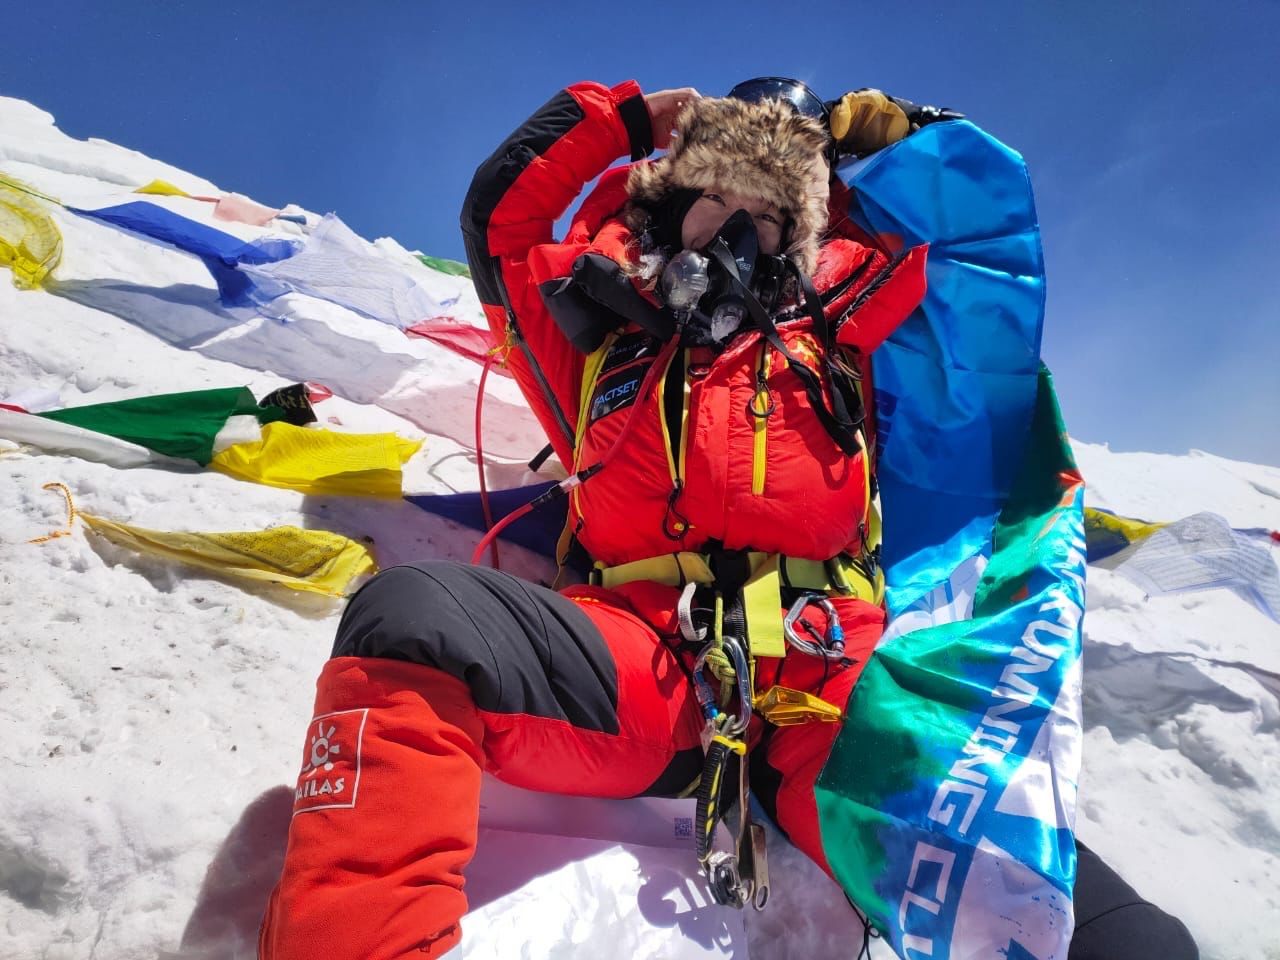 Vivian Ying Cai on the summit Everest. Photo: Handout